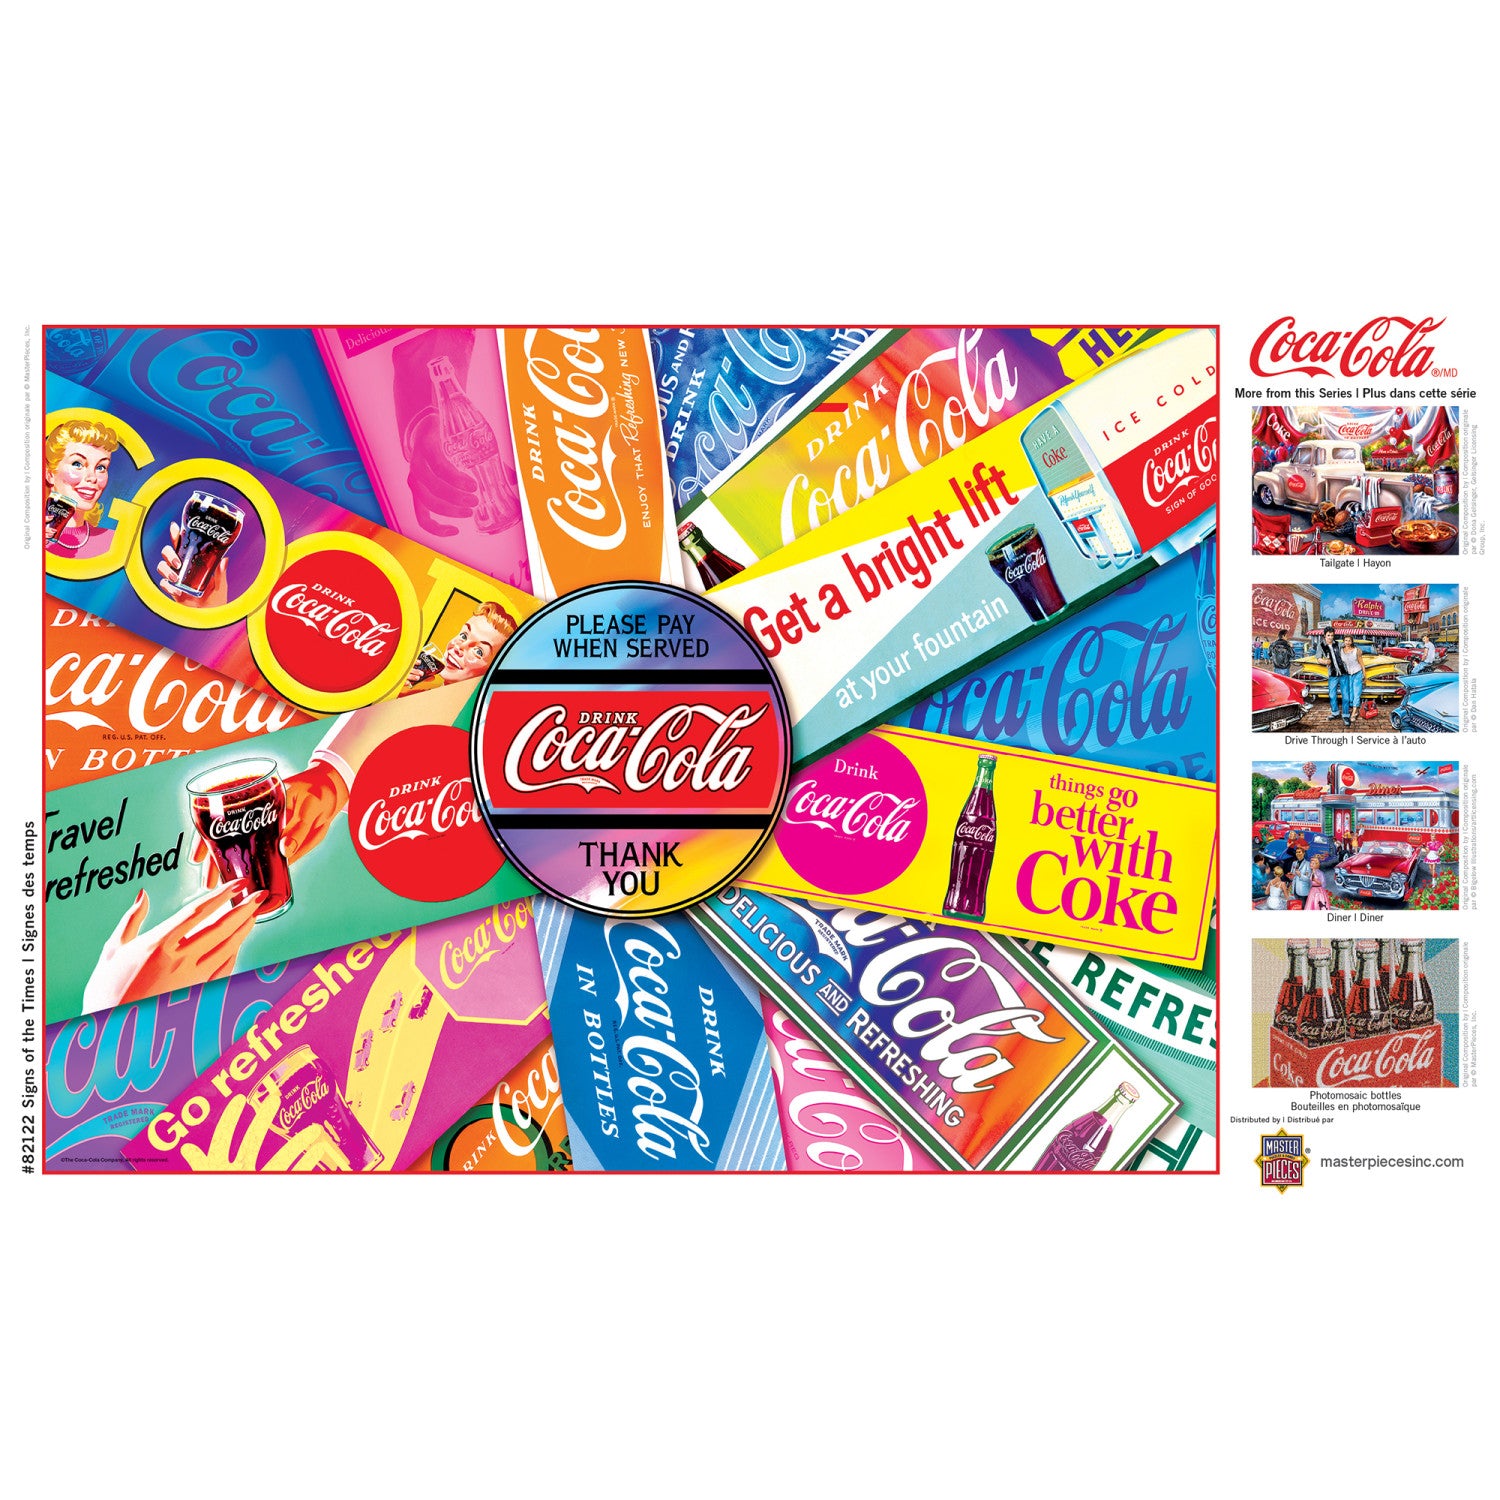 MasterPieces Photomosaic Coca-Cola® Mosaic Bottles Jigsaw Puzzle, 1000 pc -  Foods Co.